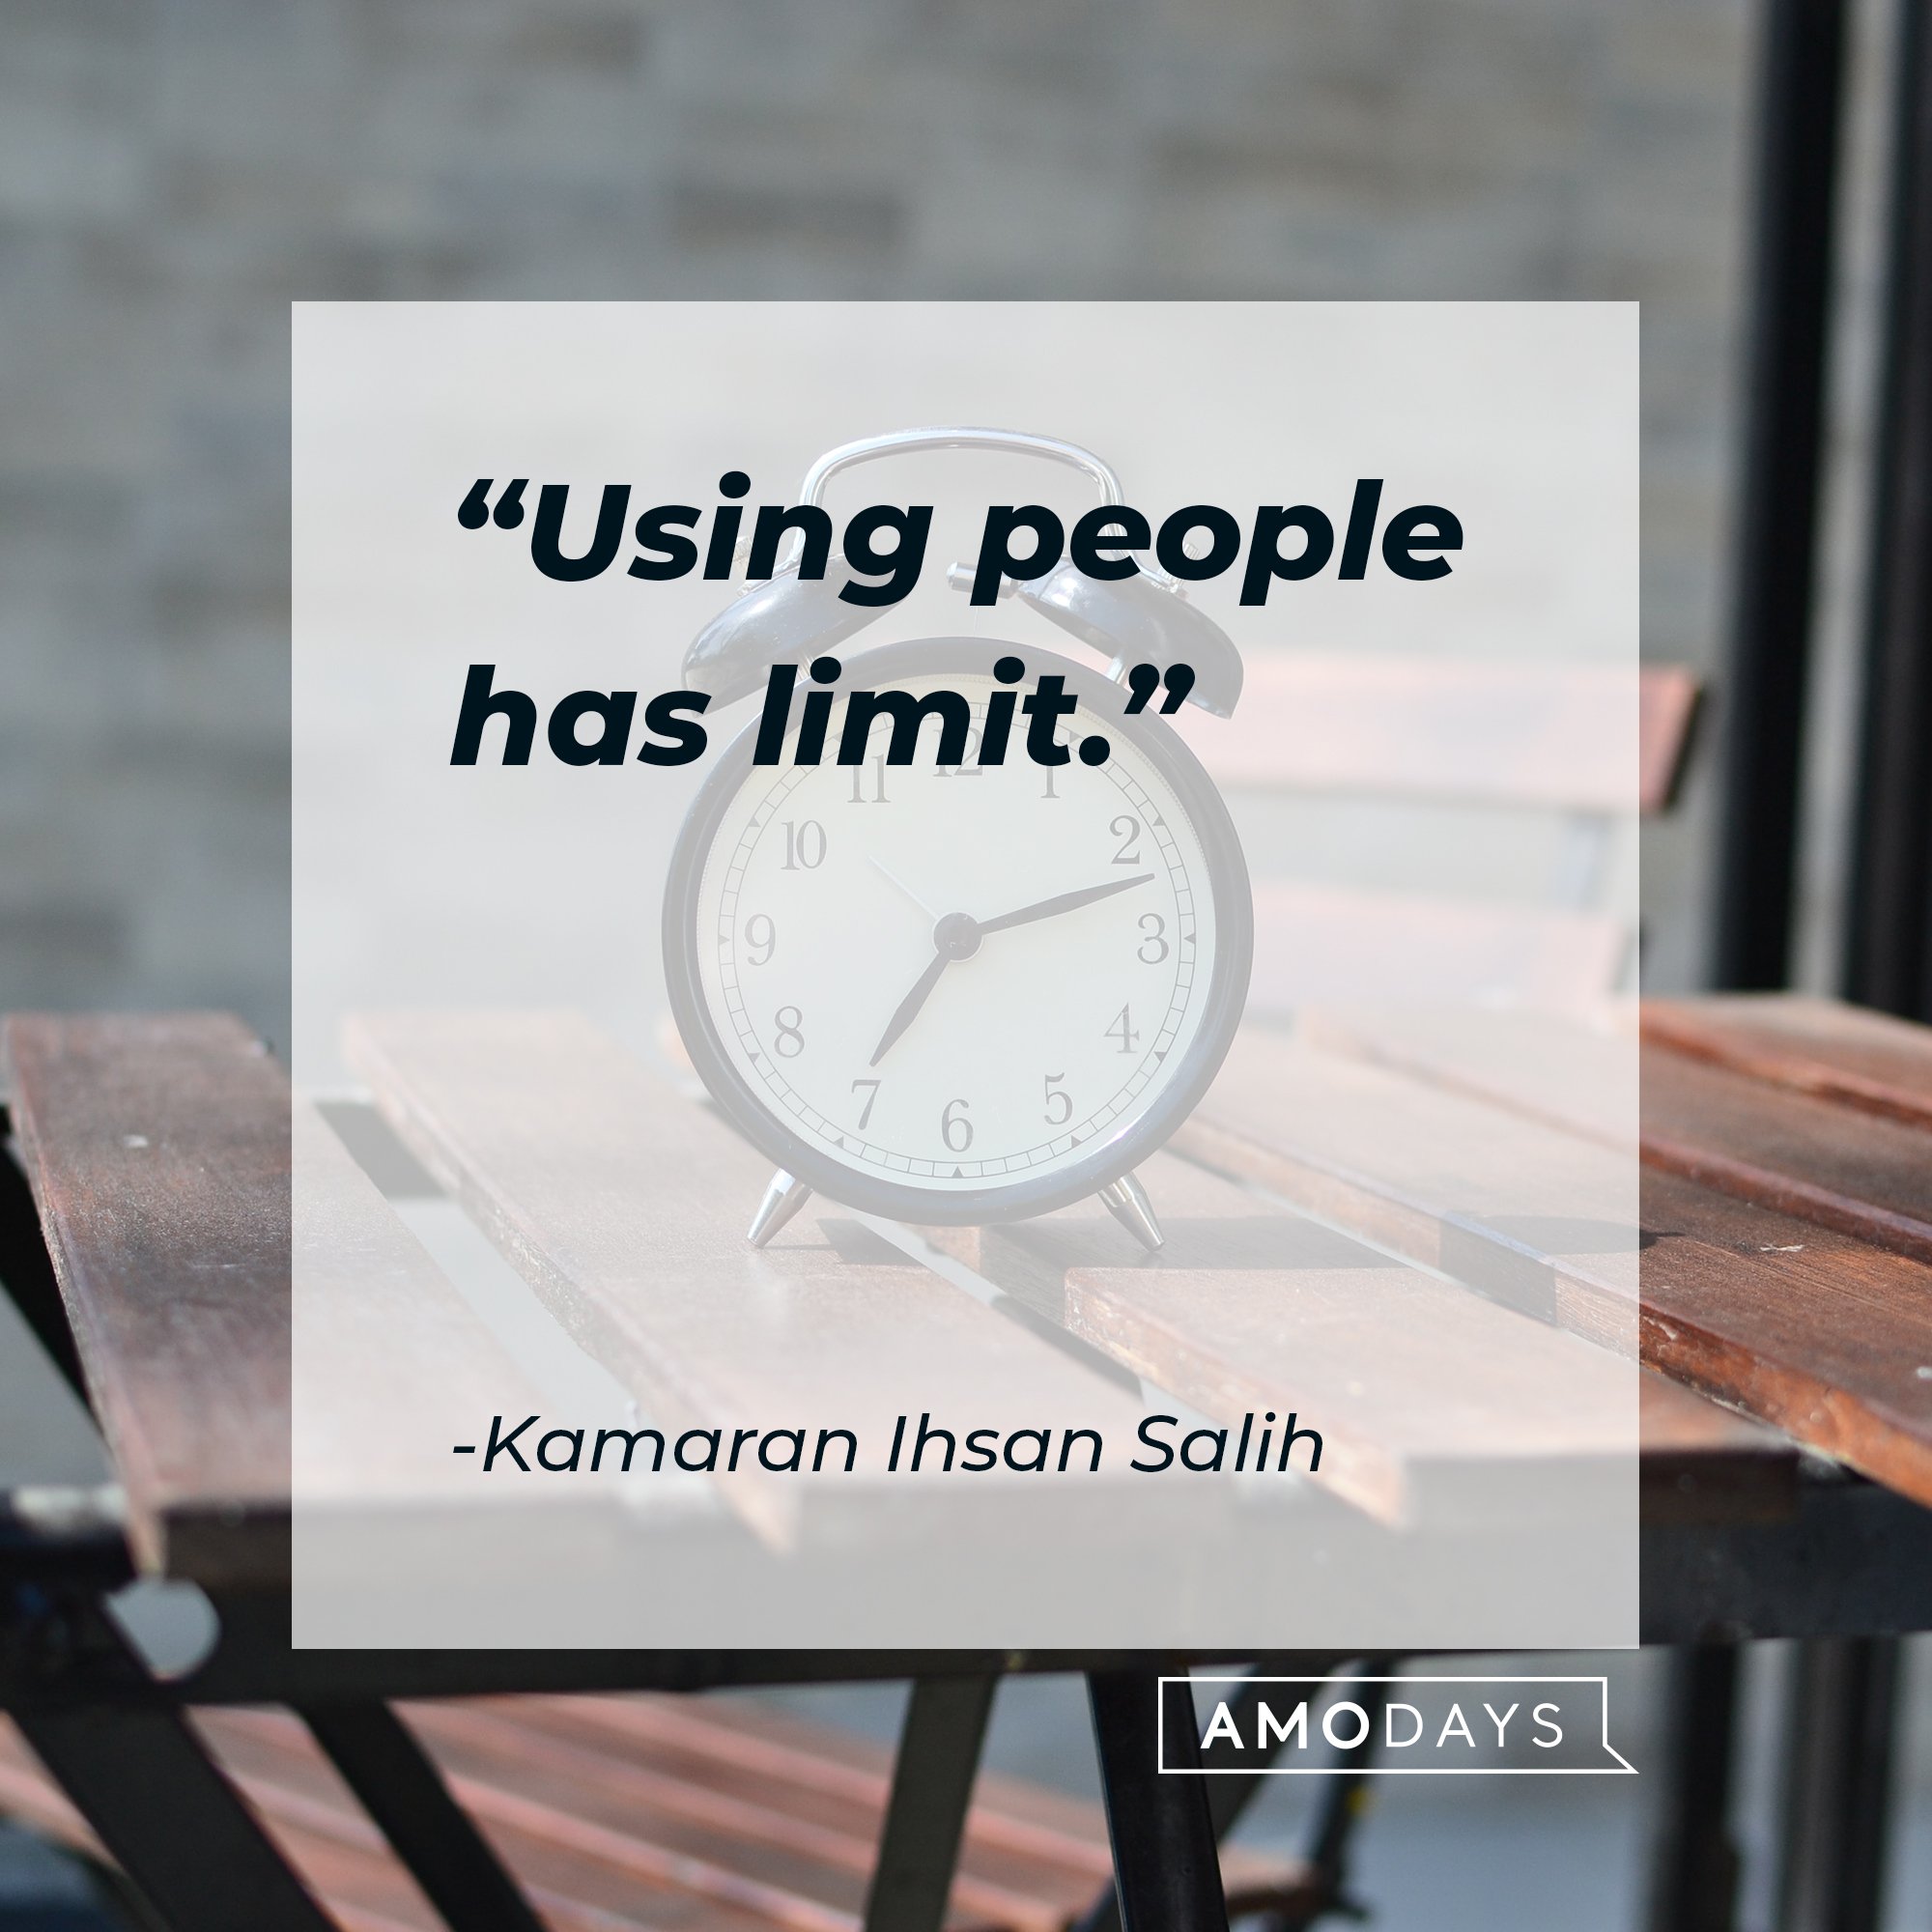  Kamaran Ihsan Salih’s quote: “Using people has limit.” | Image: AmoDays